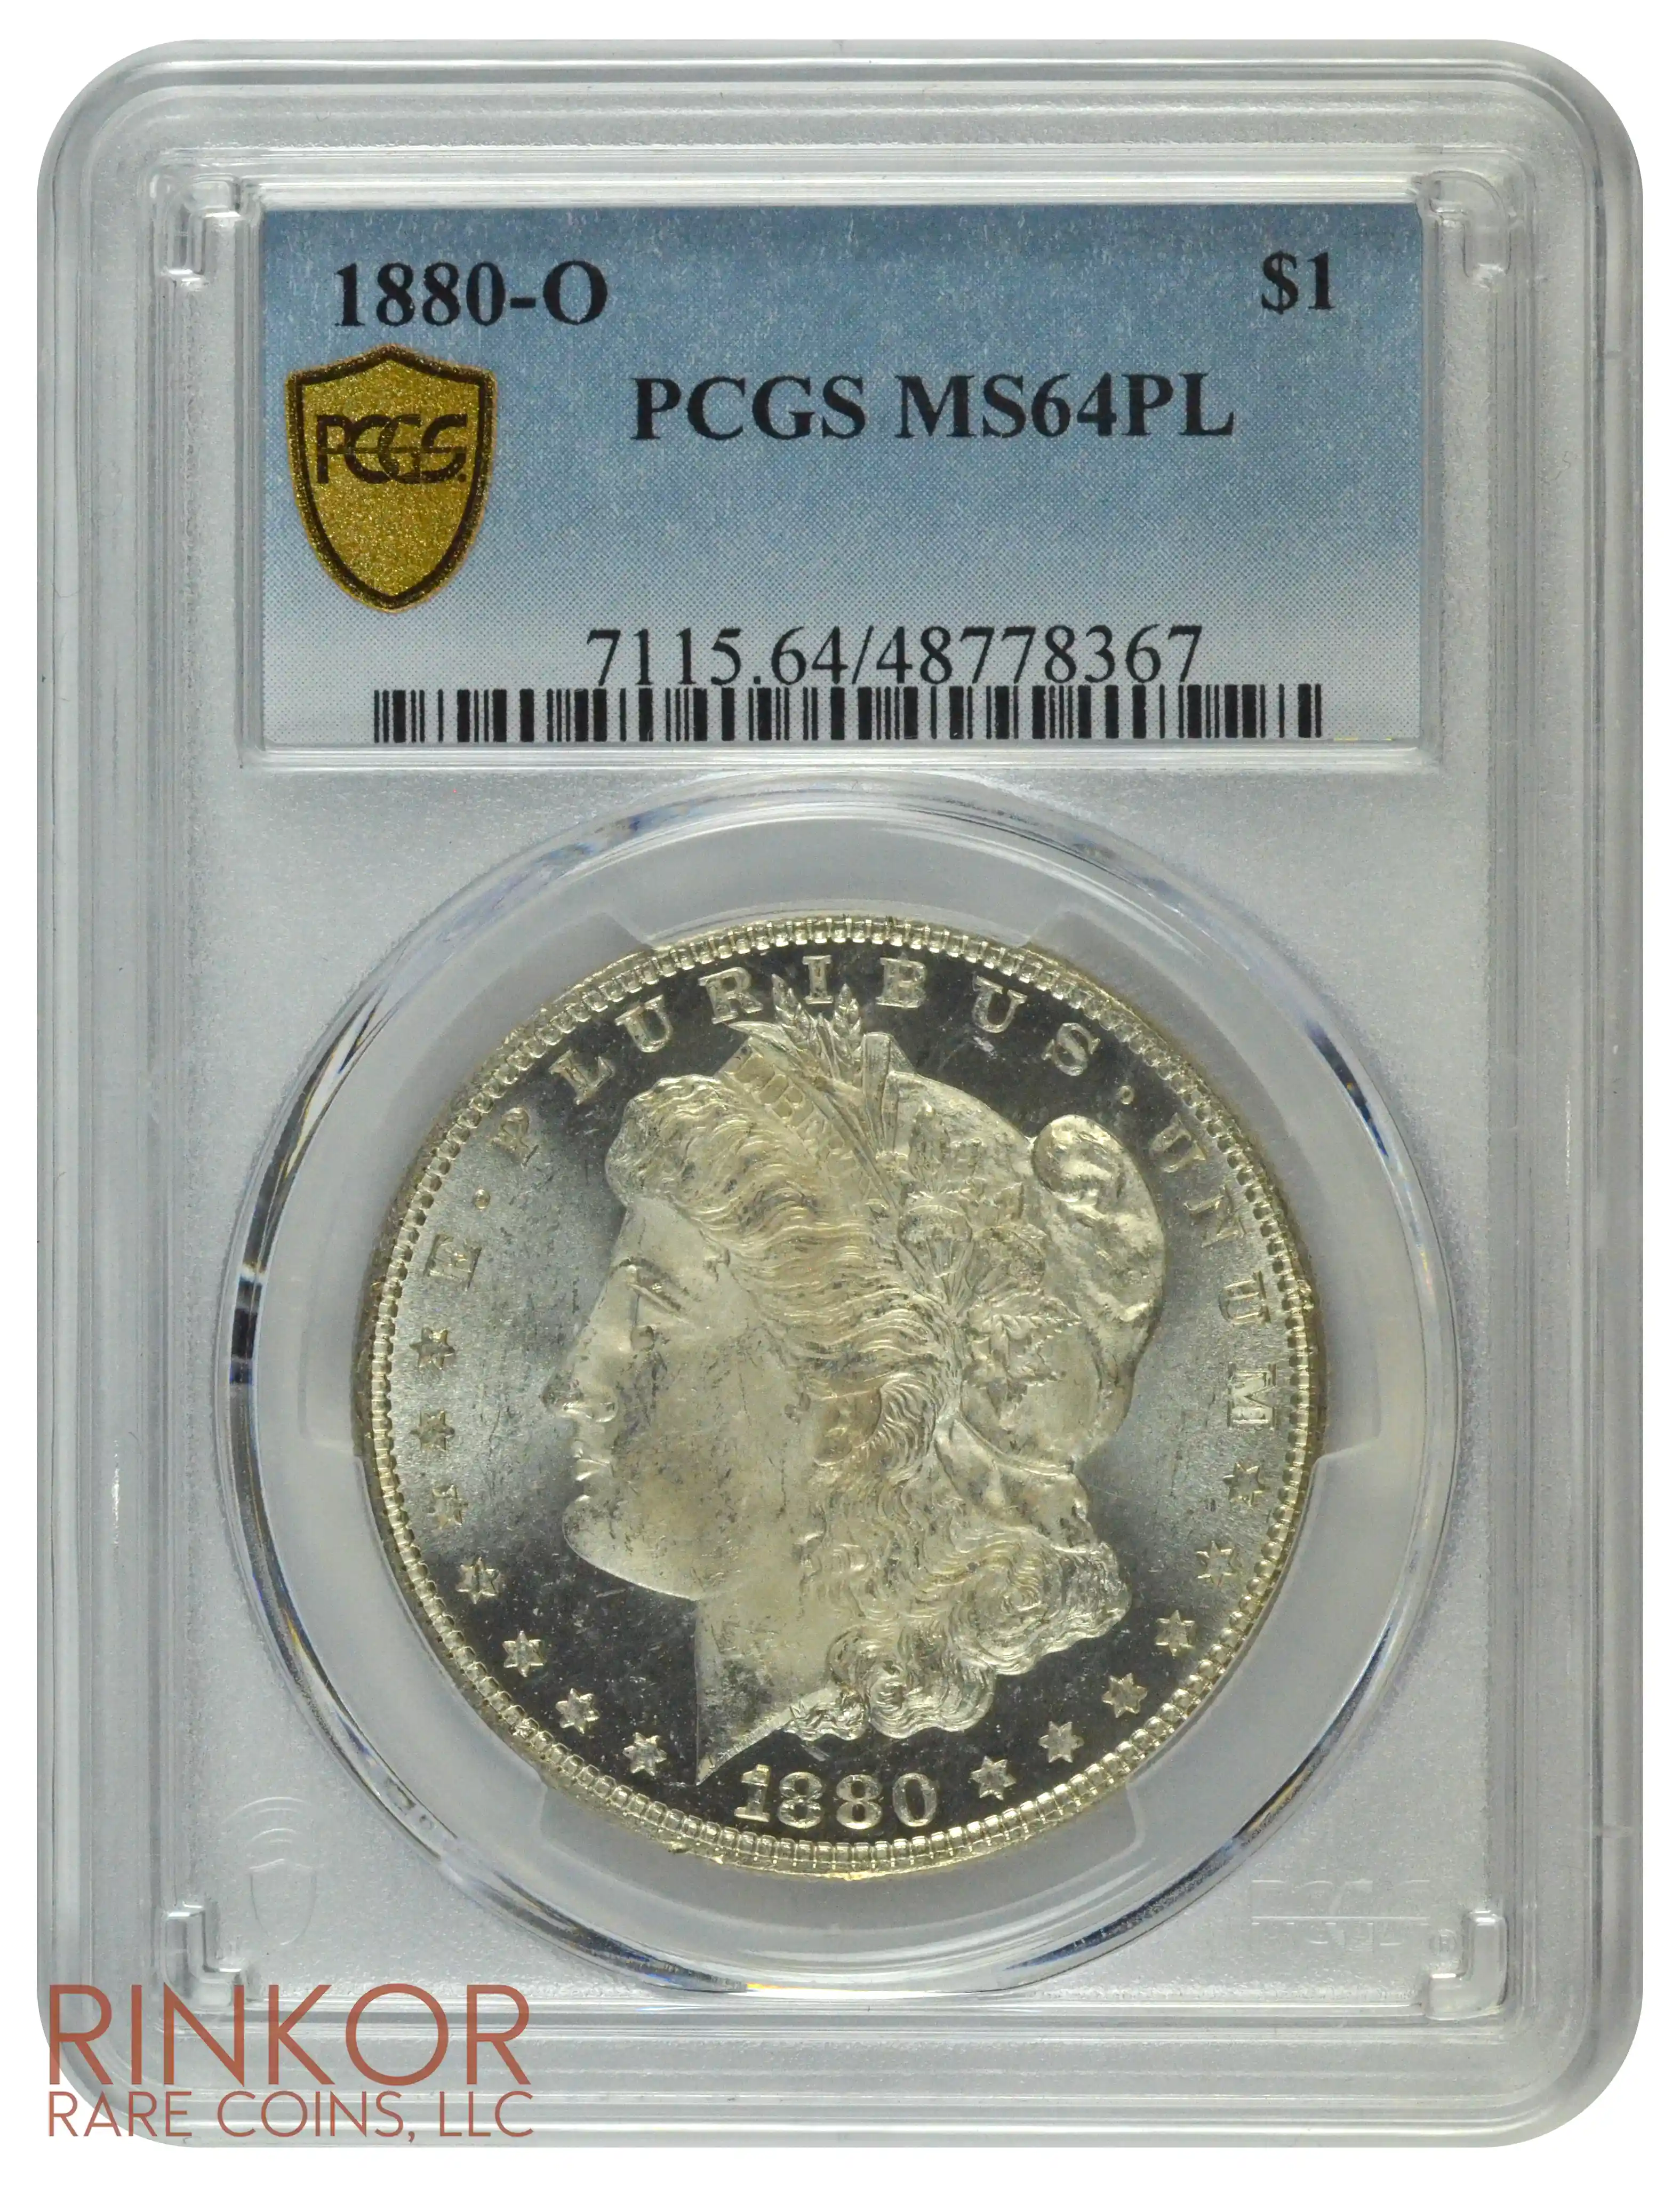 1880-O $1 PCGS MS 64 PL